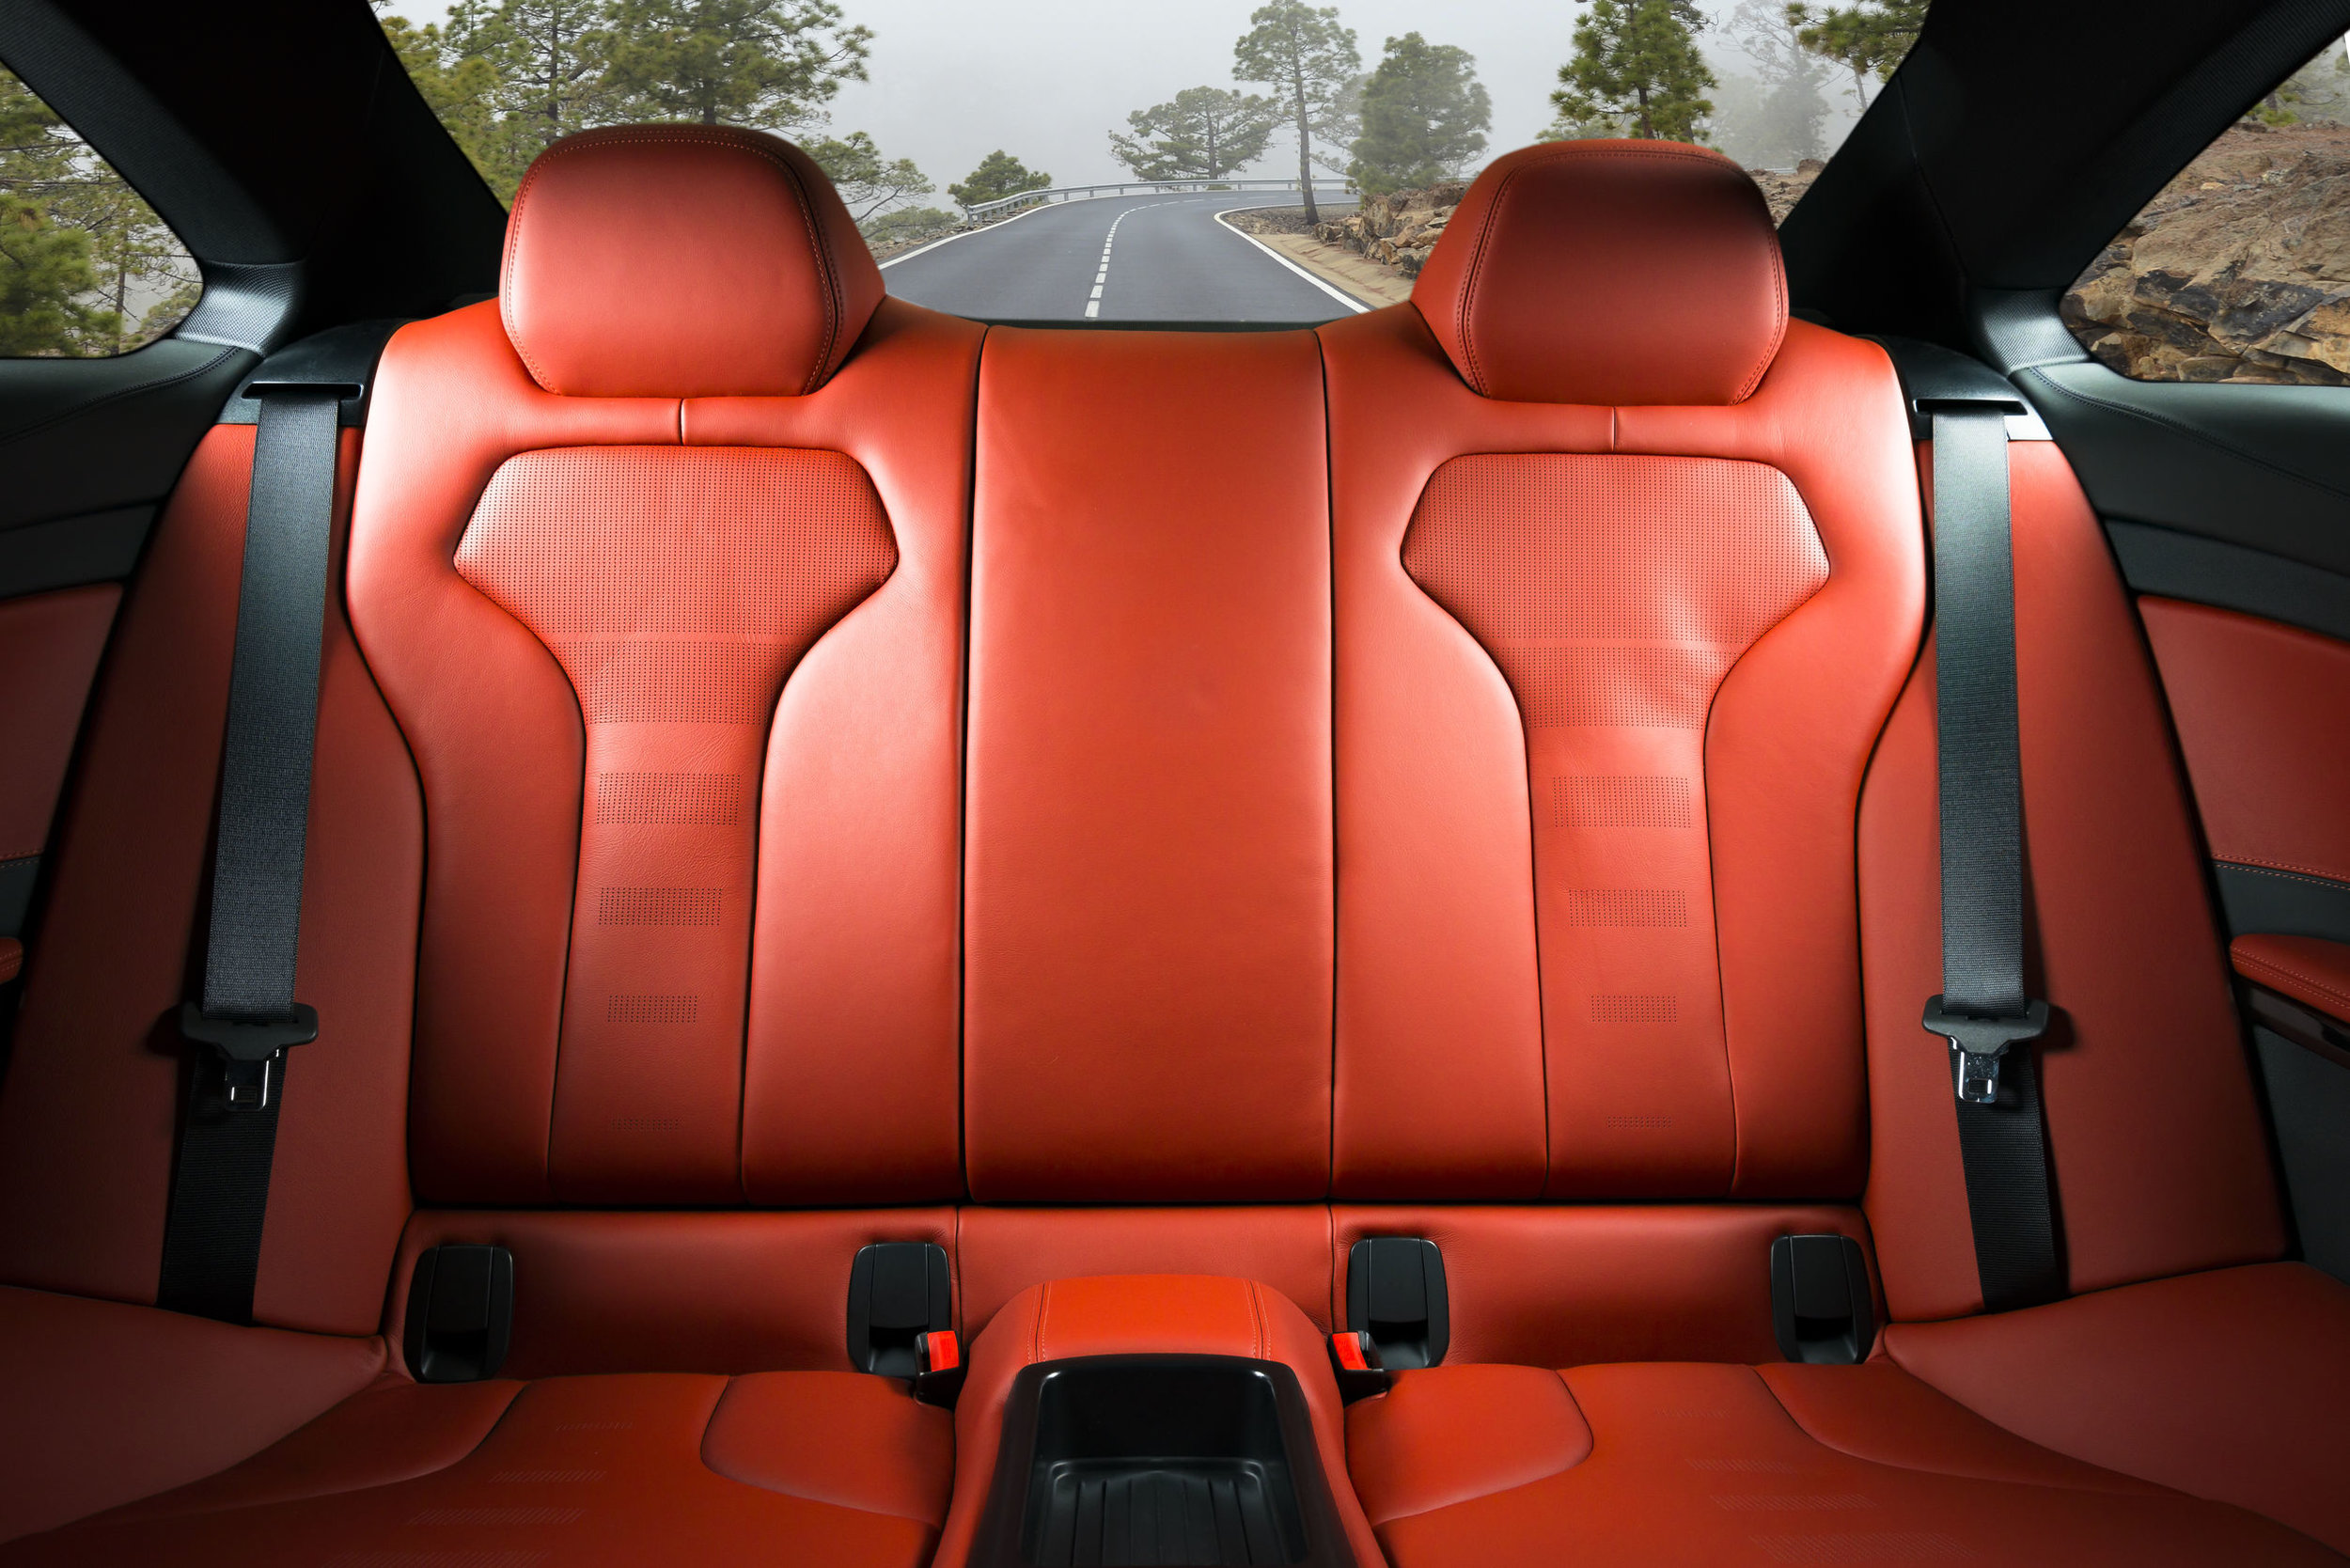 R&R Seats, Auto Restoration & Upholstery